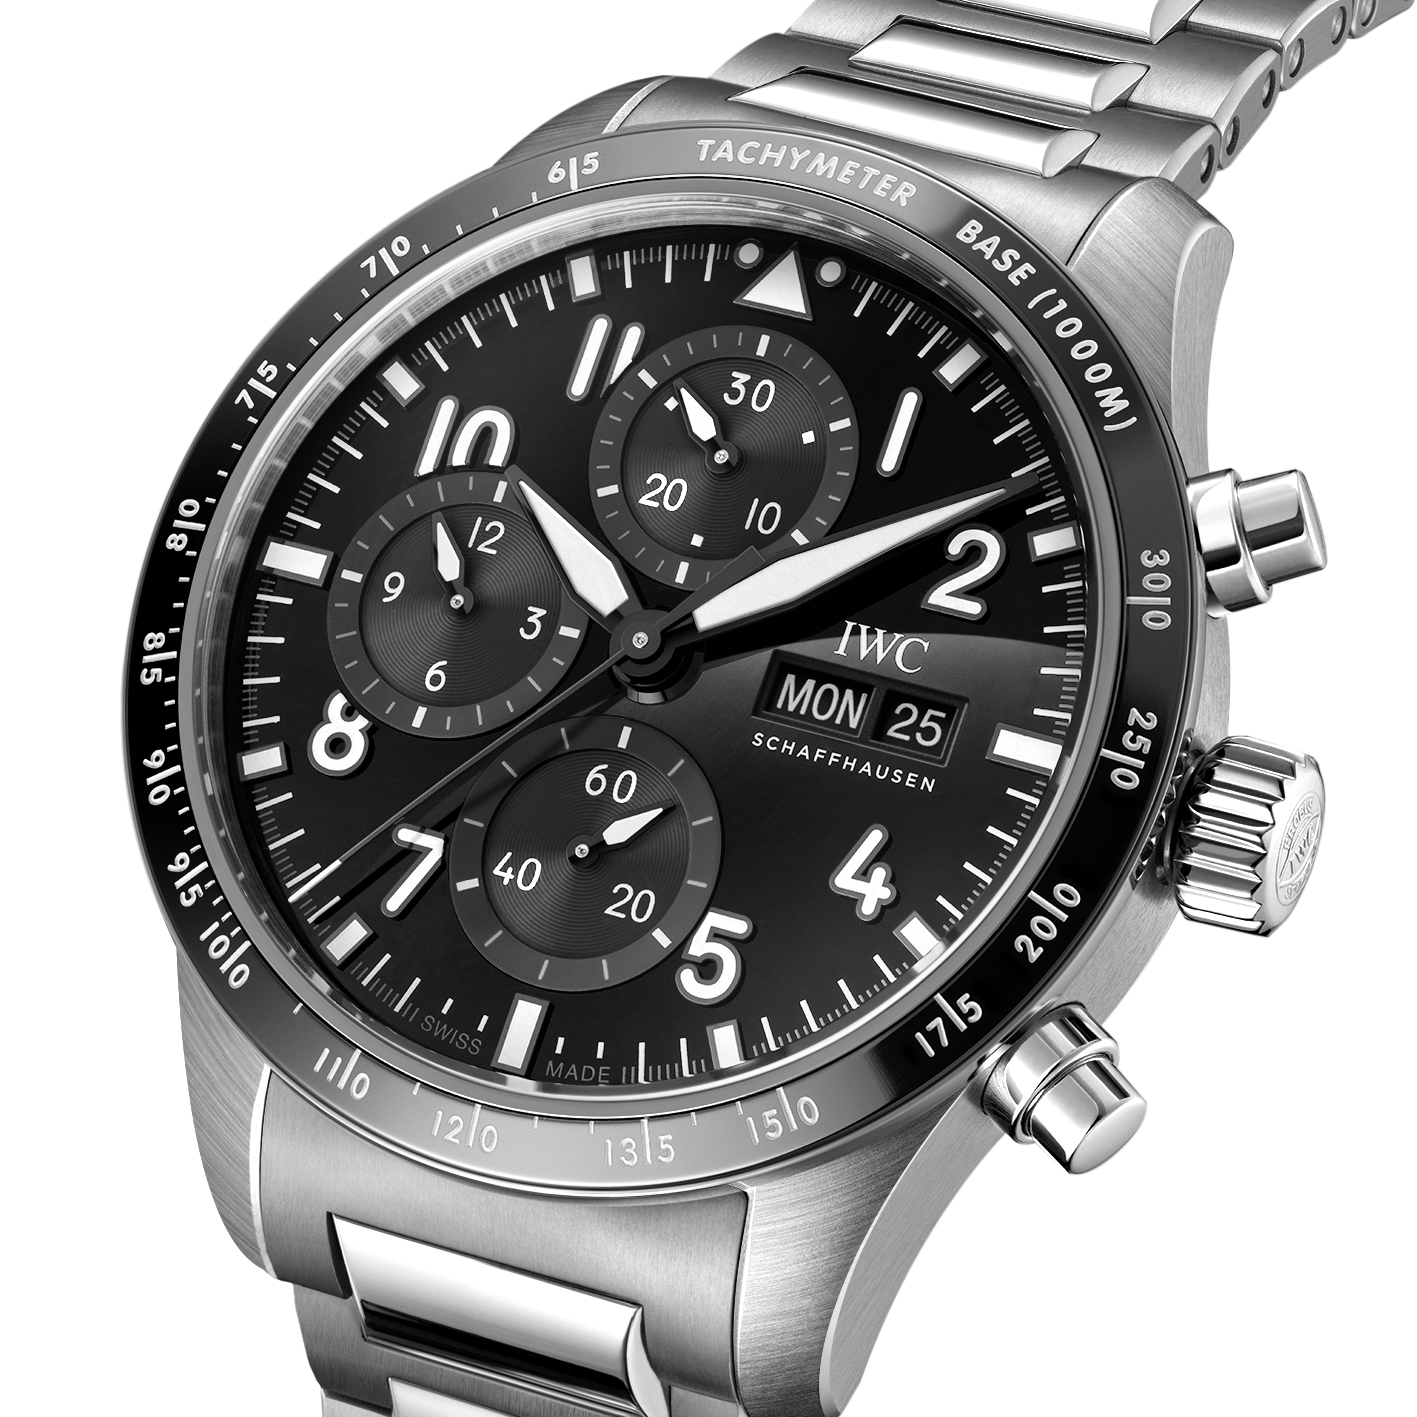 IWC Pilot’s Watch Performance Chronograph 41 AMG